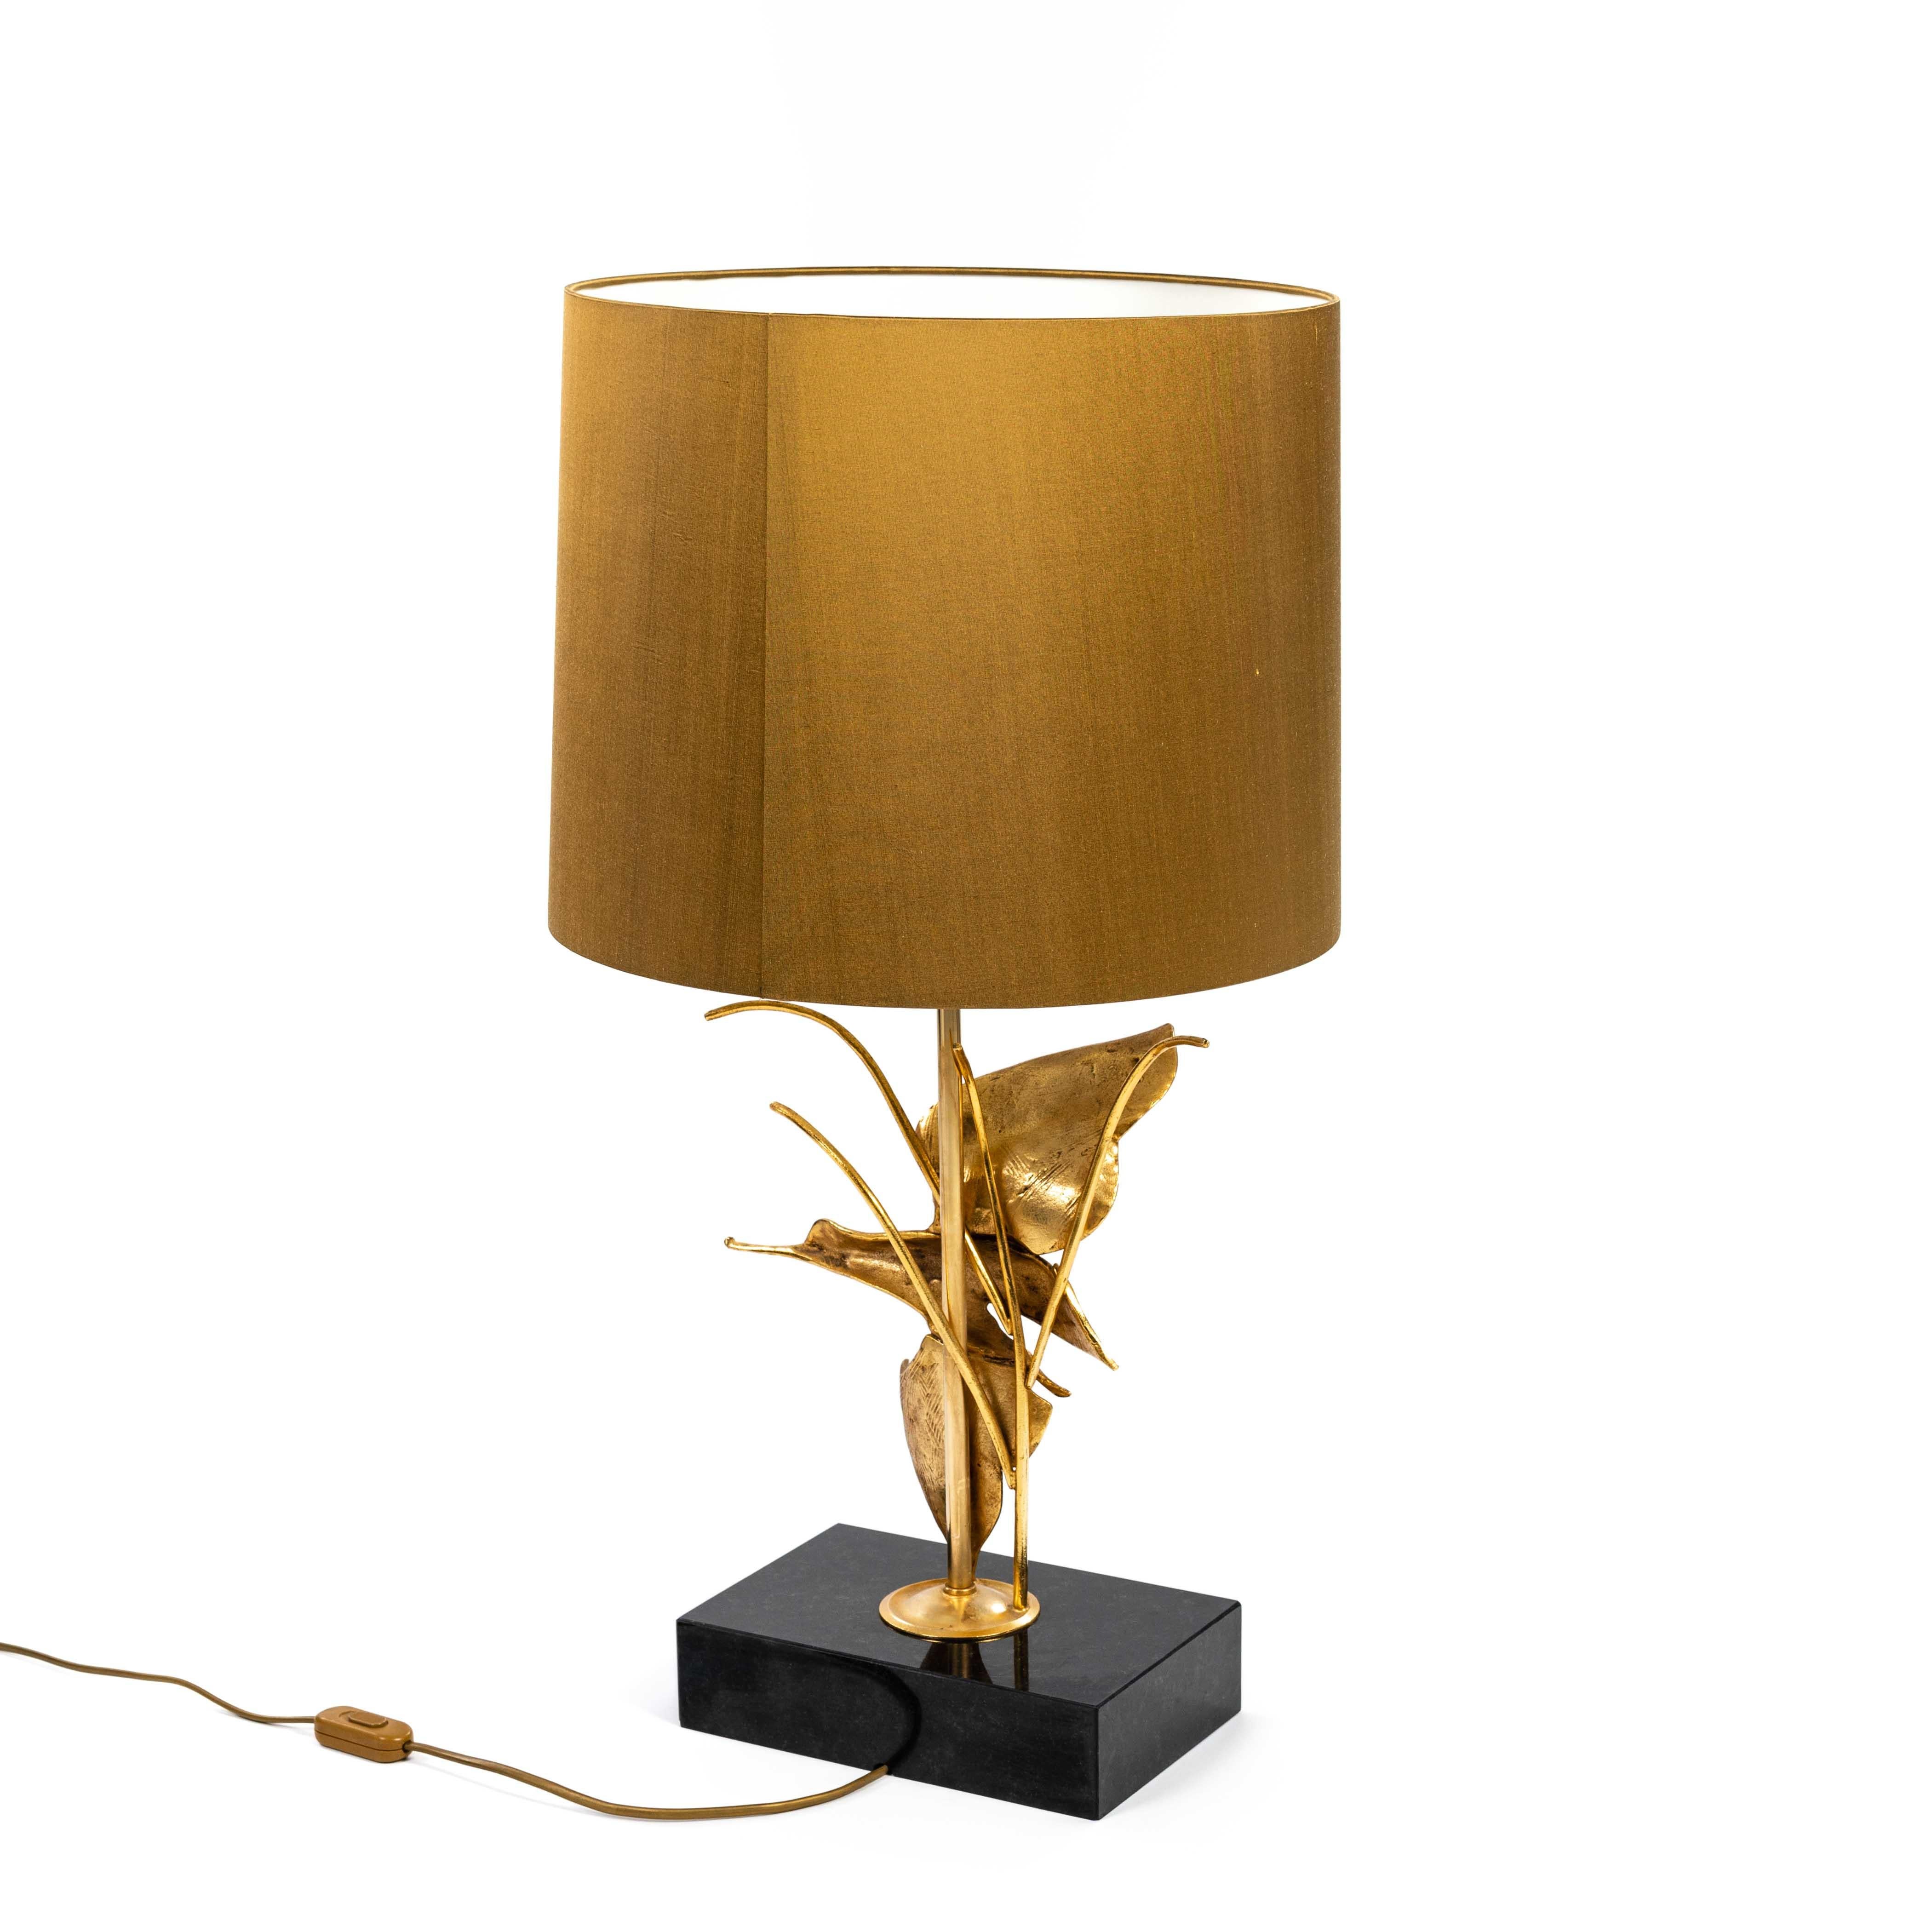 Mid-20th Century Italian Midcentury Gilded Brass Bird Table Lamp by GM Italia 1950s For Sale